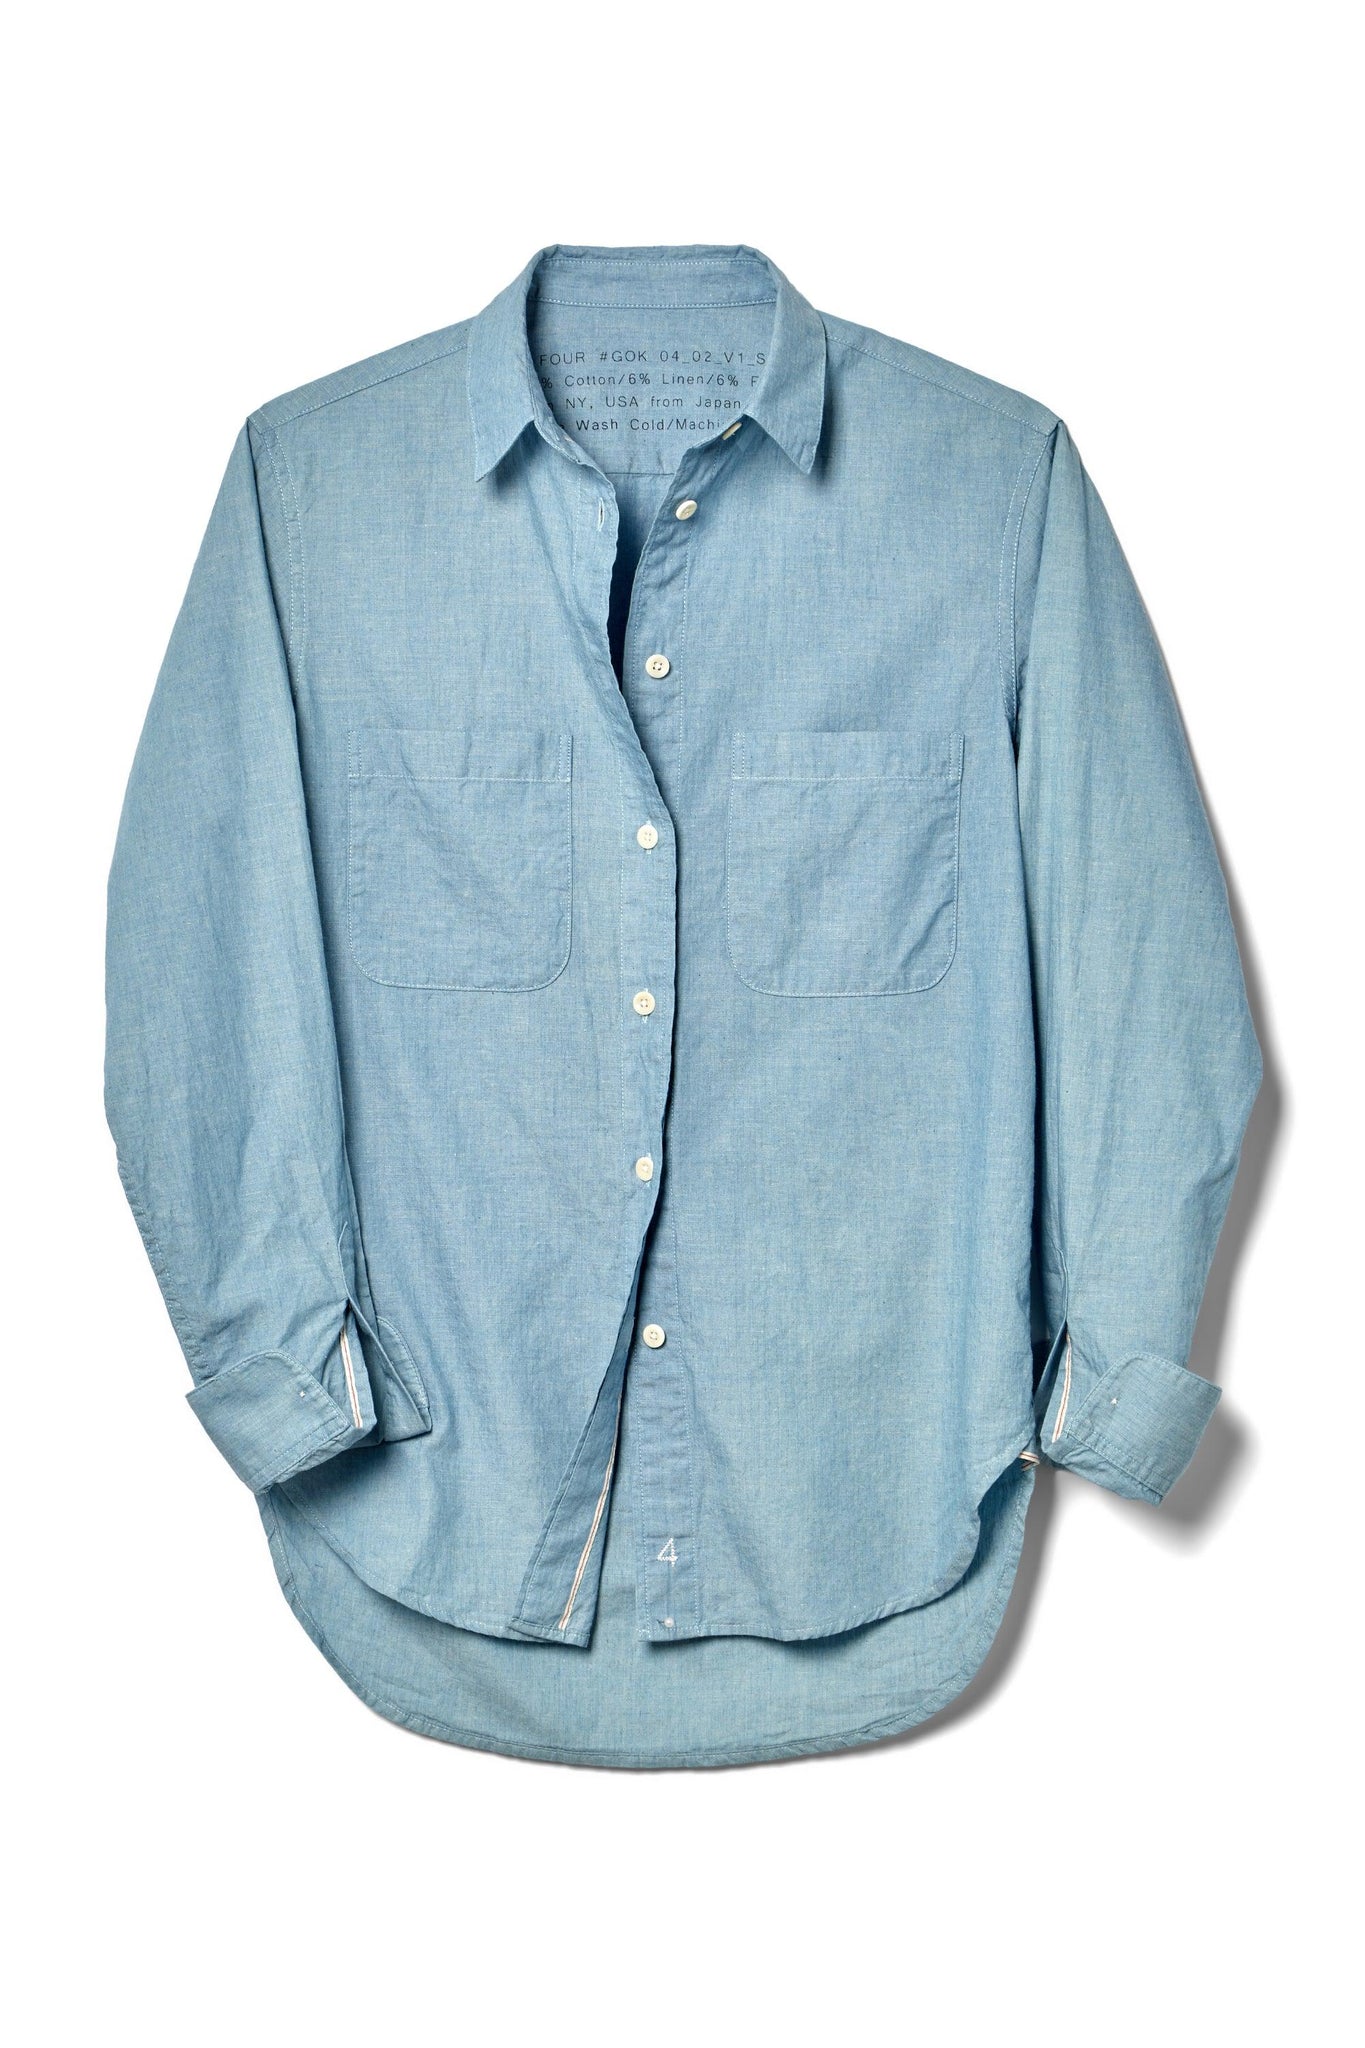 Work Shirt in organic cotton chambray, linen & rws merino by 4 in Shirts & Tops